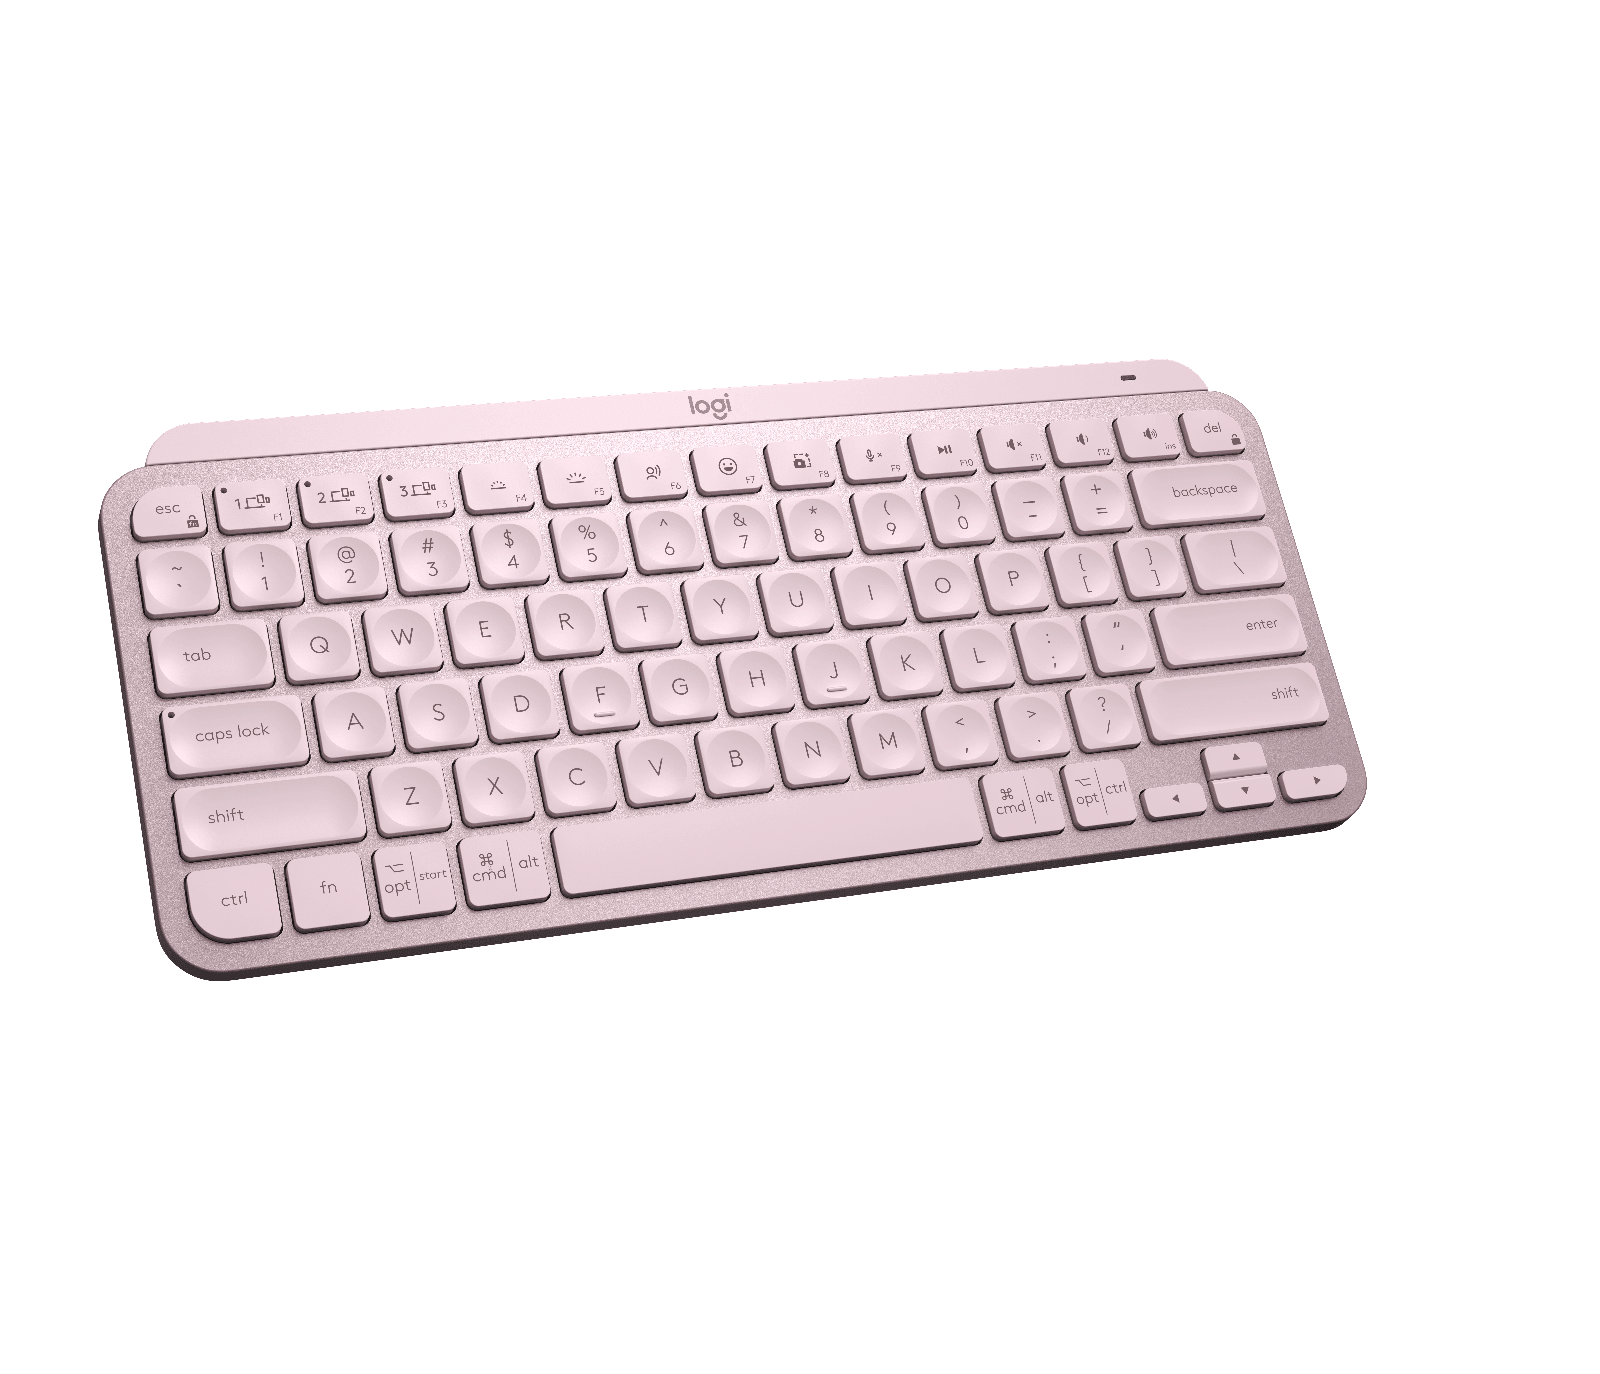 Logitech MX Keys Mini Wireless Illuminated Keyboard Rose 920-010507